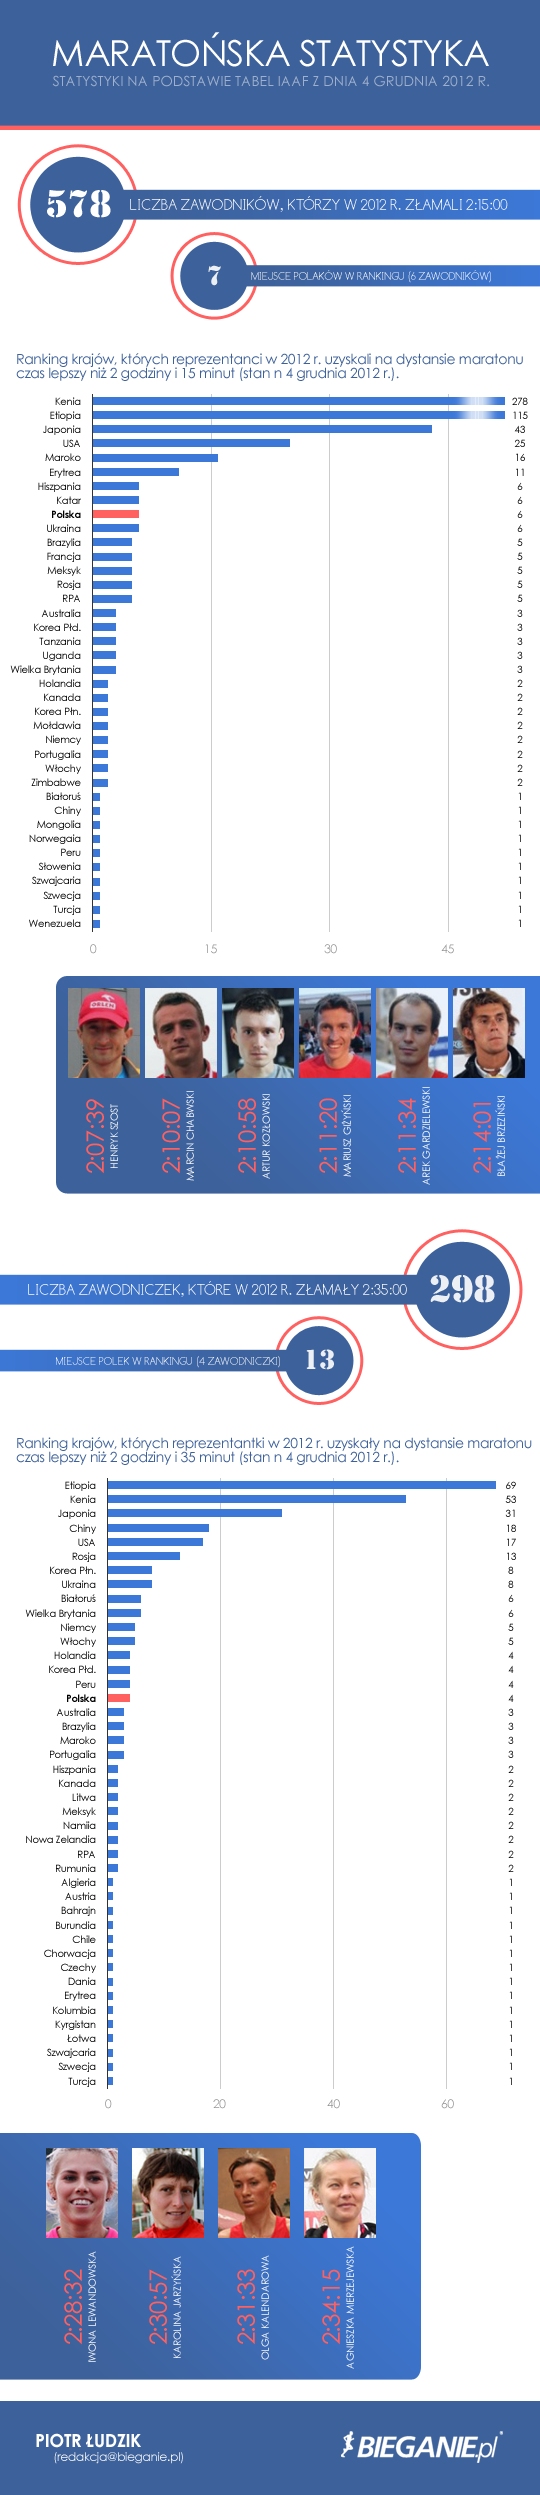 infografika_maraton.png